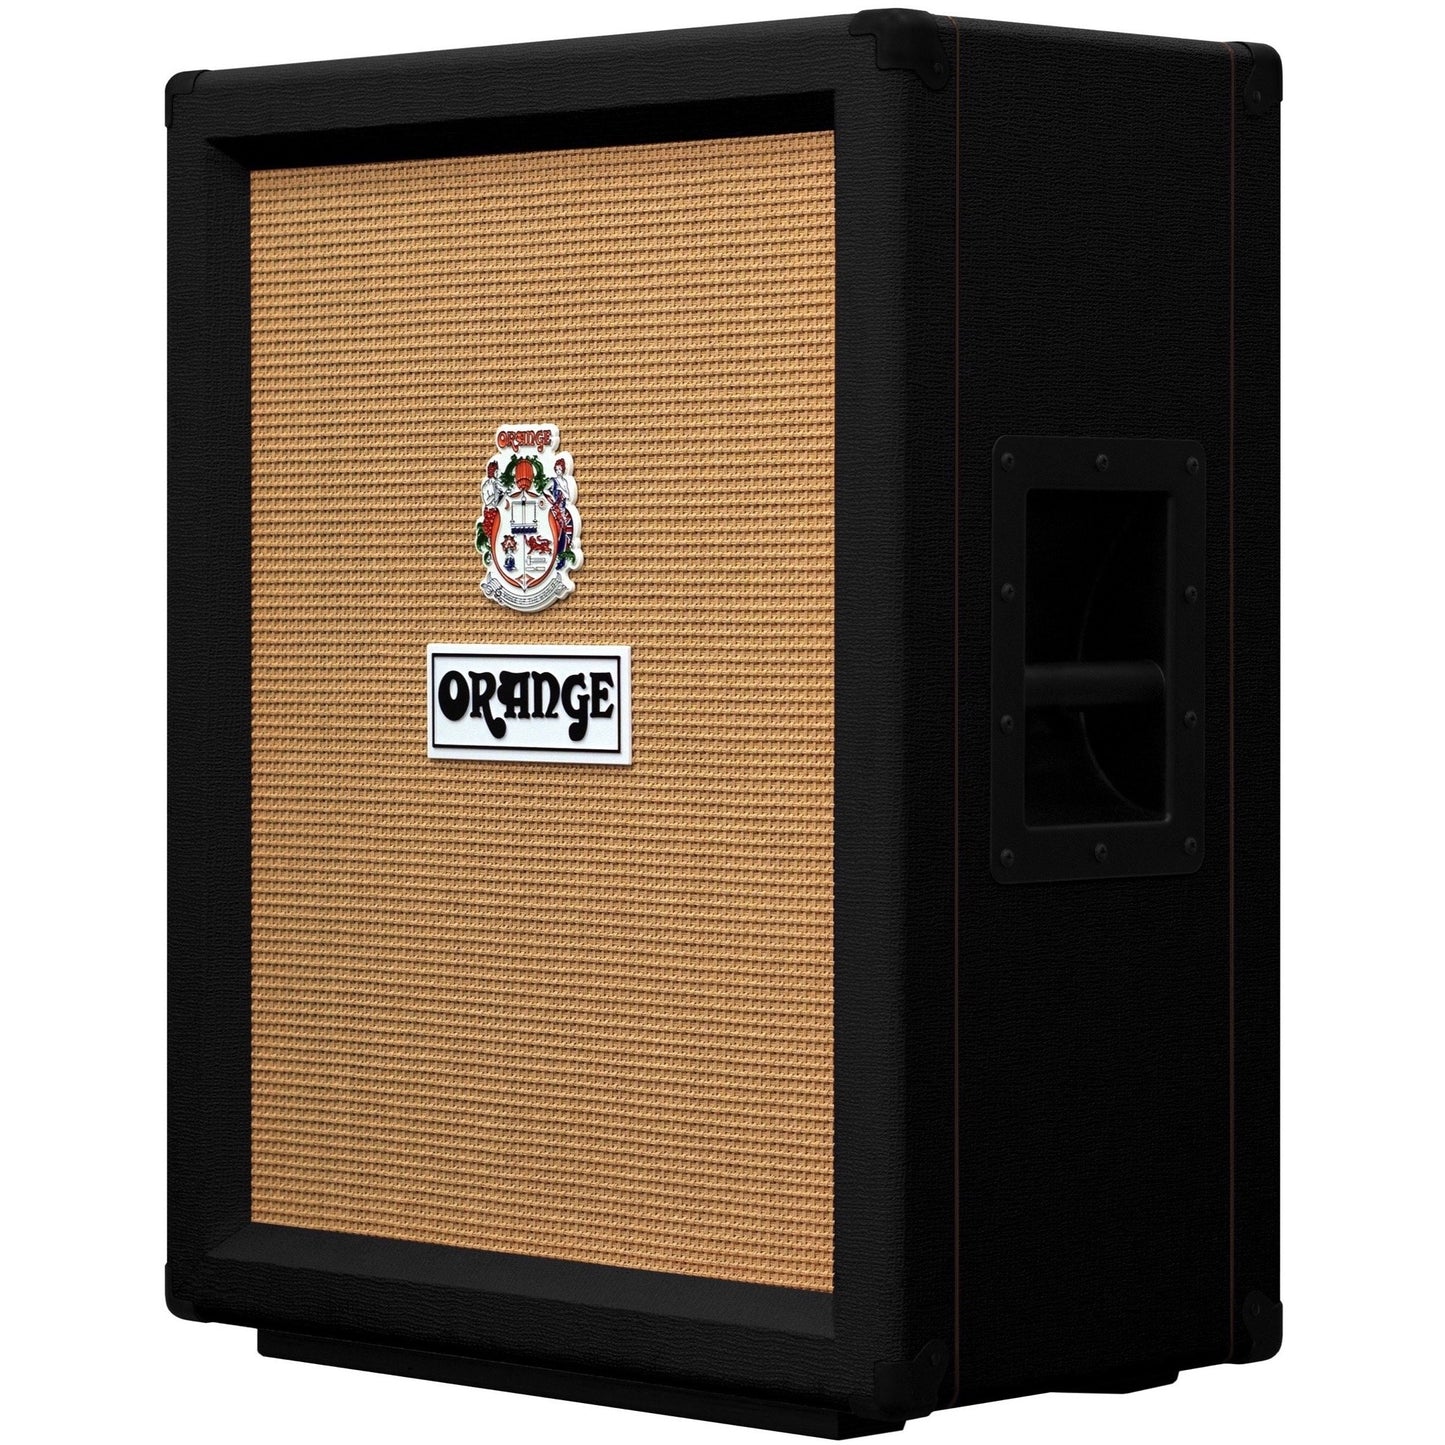 Orange PPC212V Guitar Speaker Cabinet (2x12 Inch, 120 Watts), Black, 16 Ohms